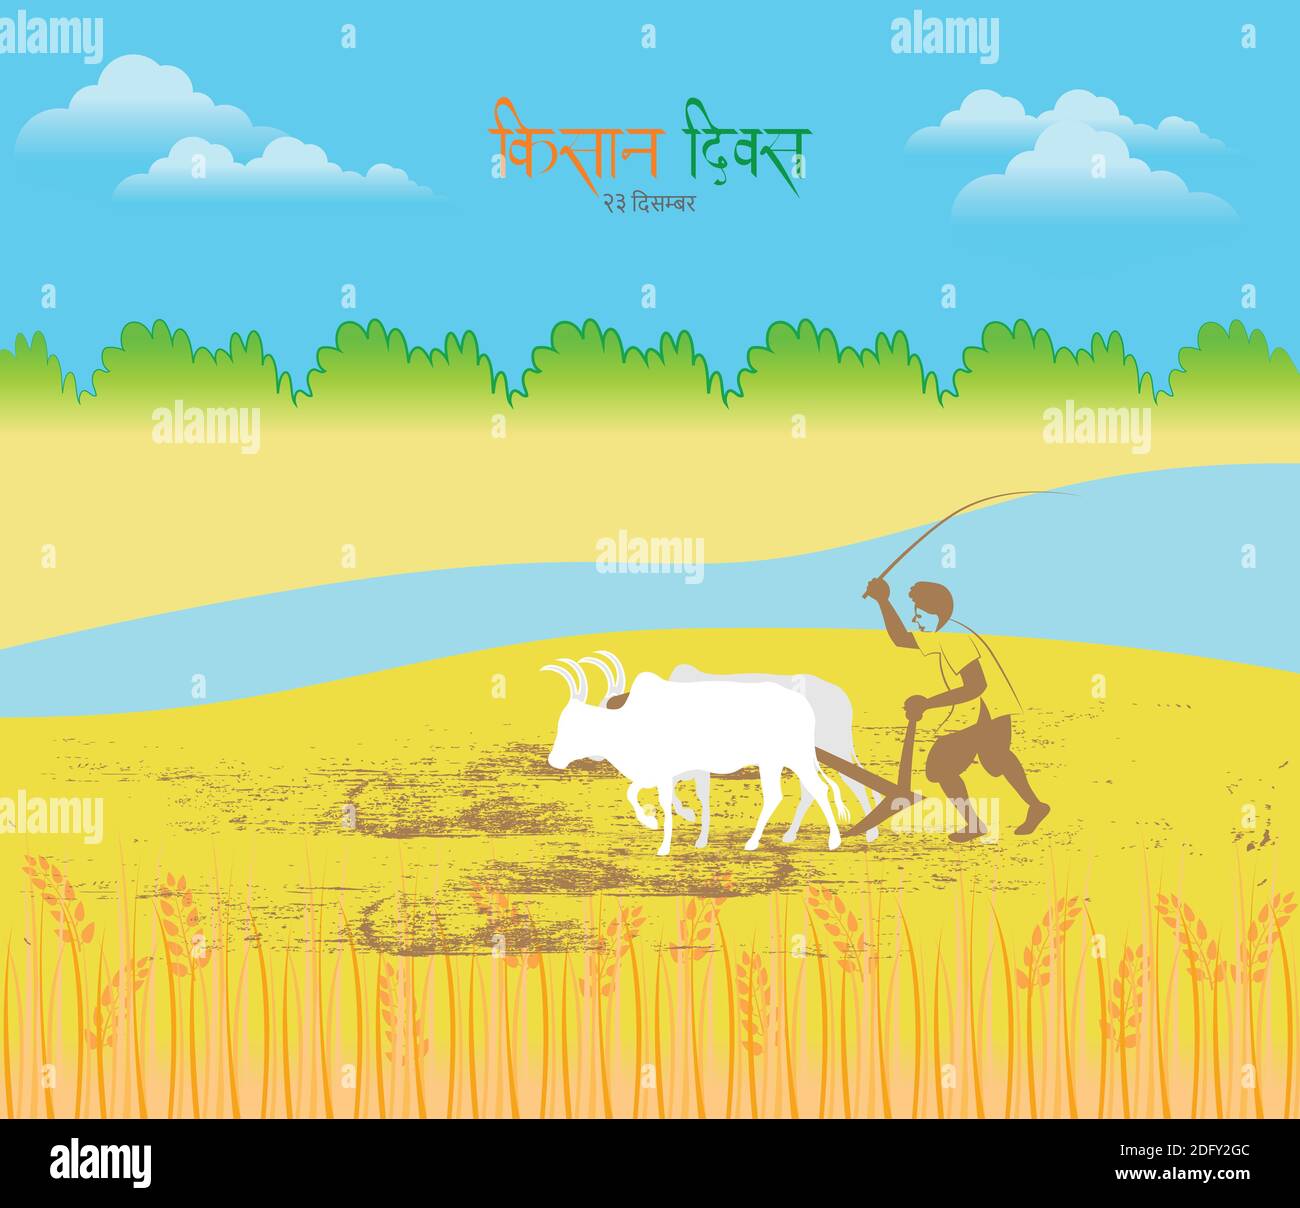 किसान दिवस चित्रकला || National farmers day drawing | Farmers day drawing  || Easy Kisan Diwas poster - YouTube